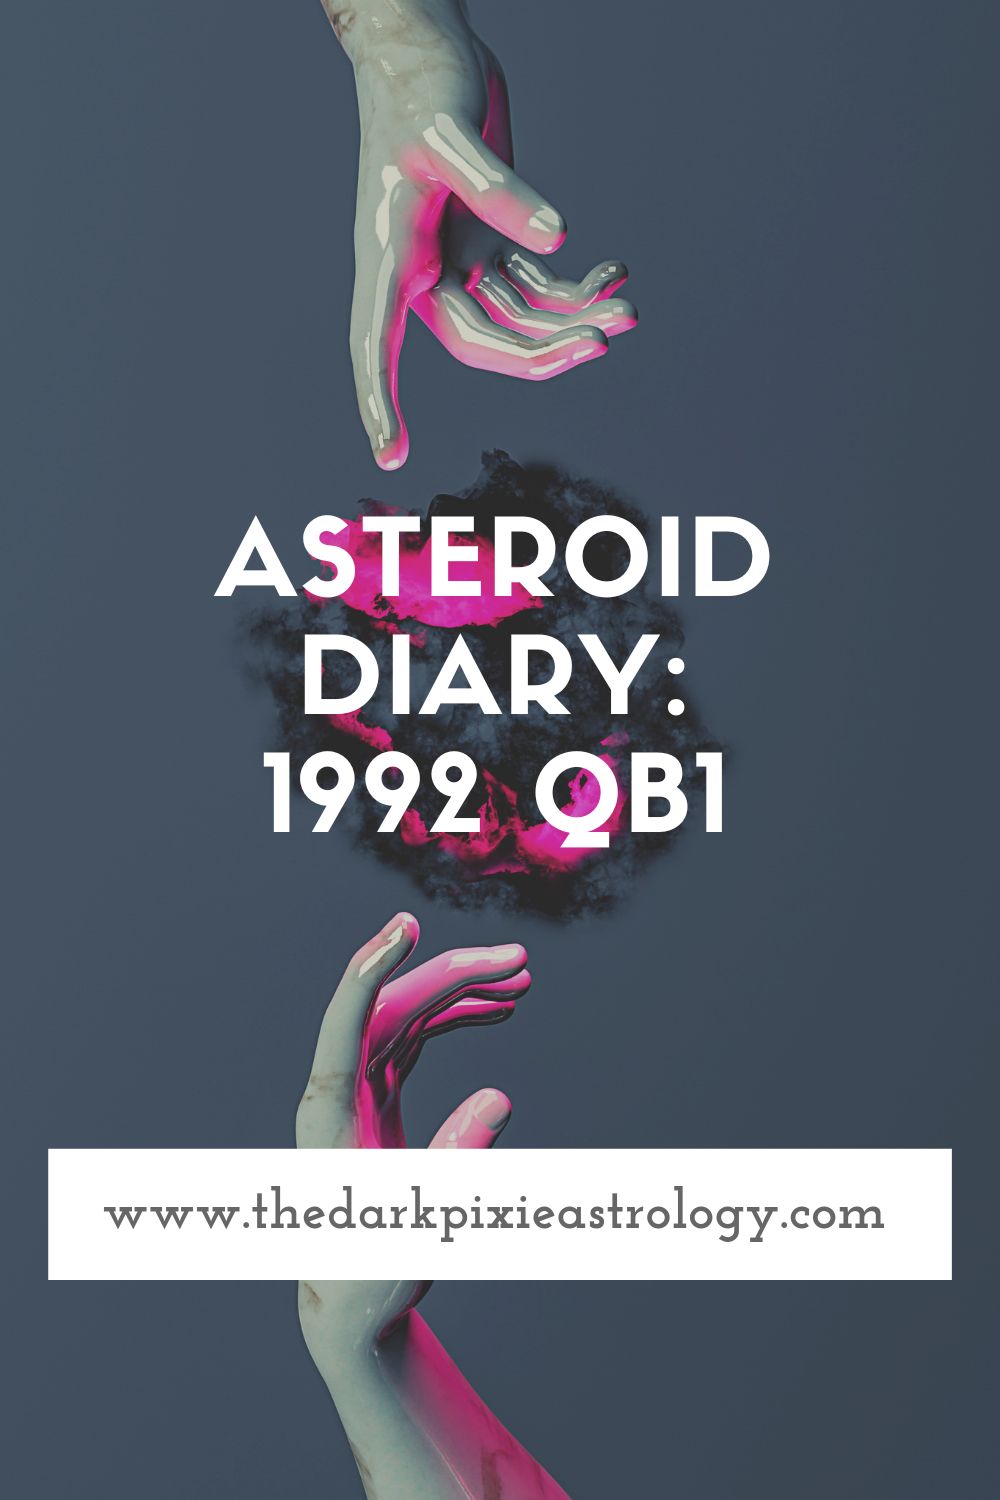 Asteroid Diary: 1992 QB1 - The Dark Pixie Astrology